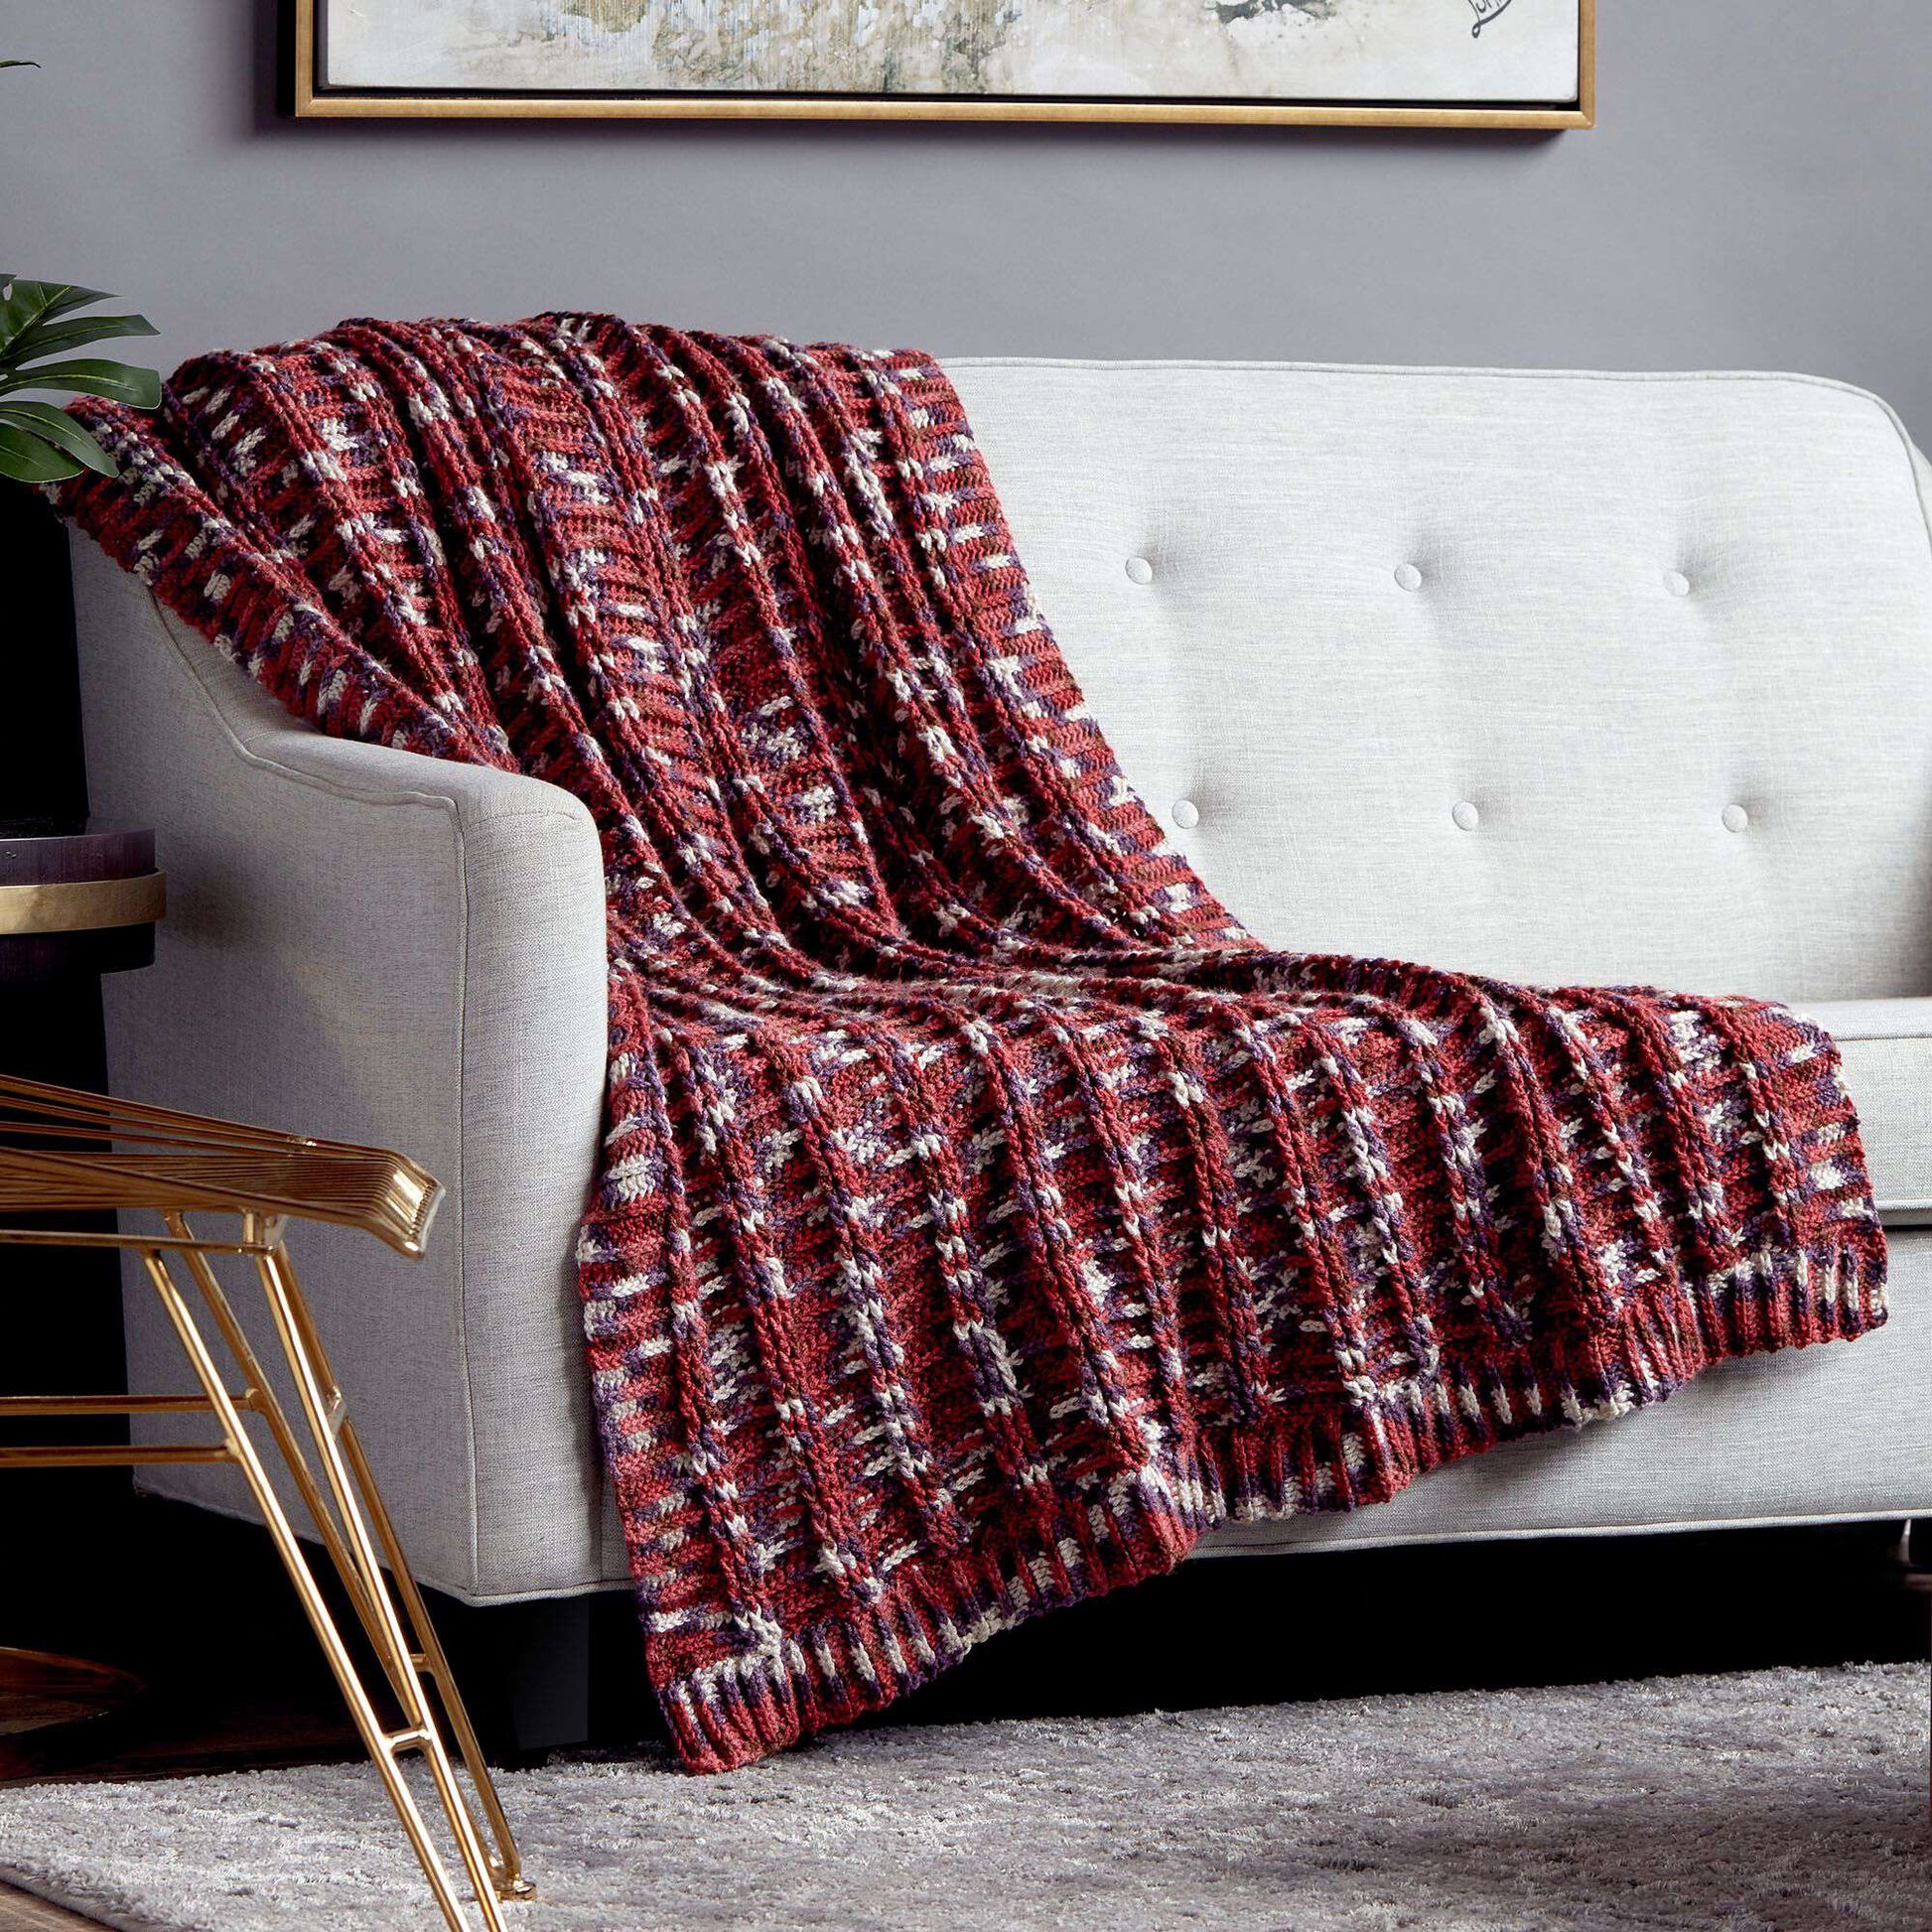 Free Caron Crochet Ridges Blanket Pattern